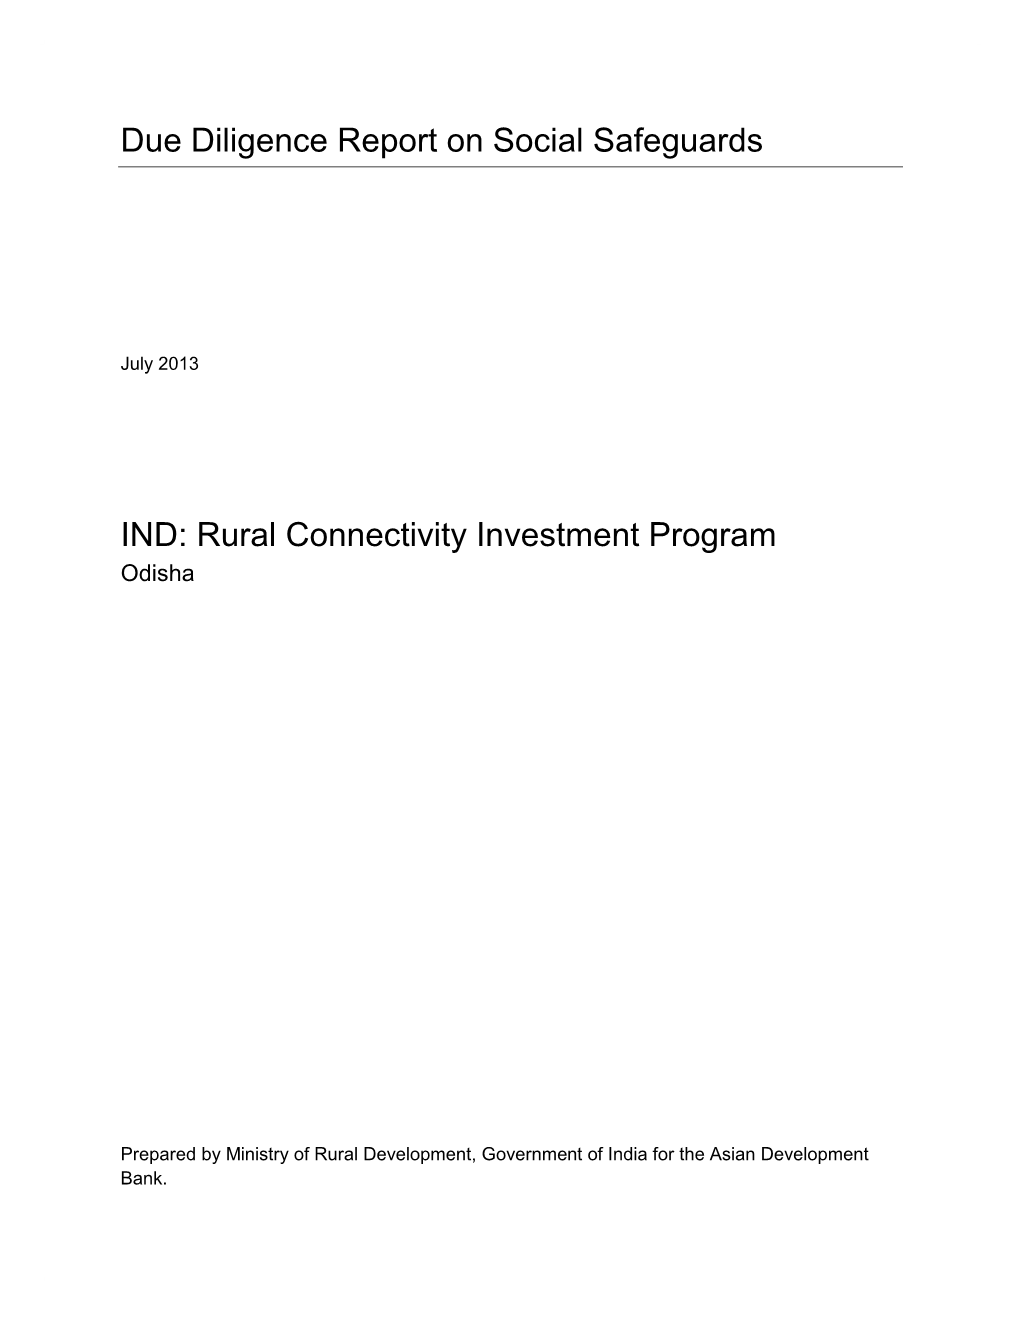 IND: Rural Connectivity Investment Program Odisha